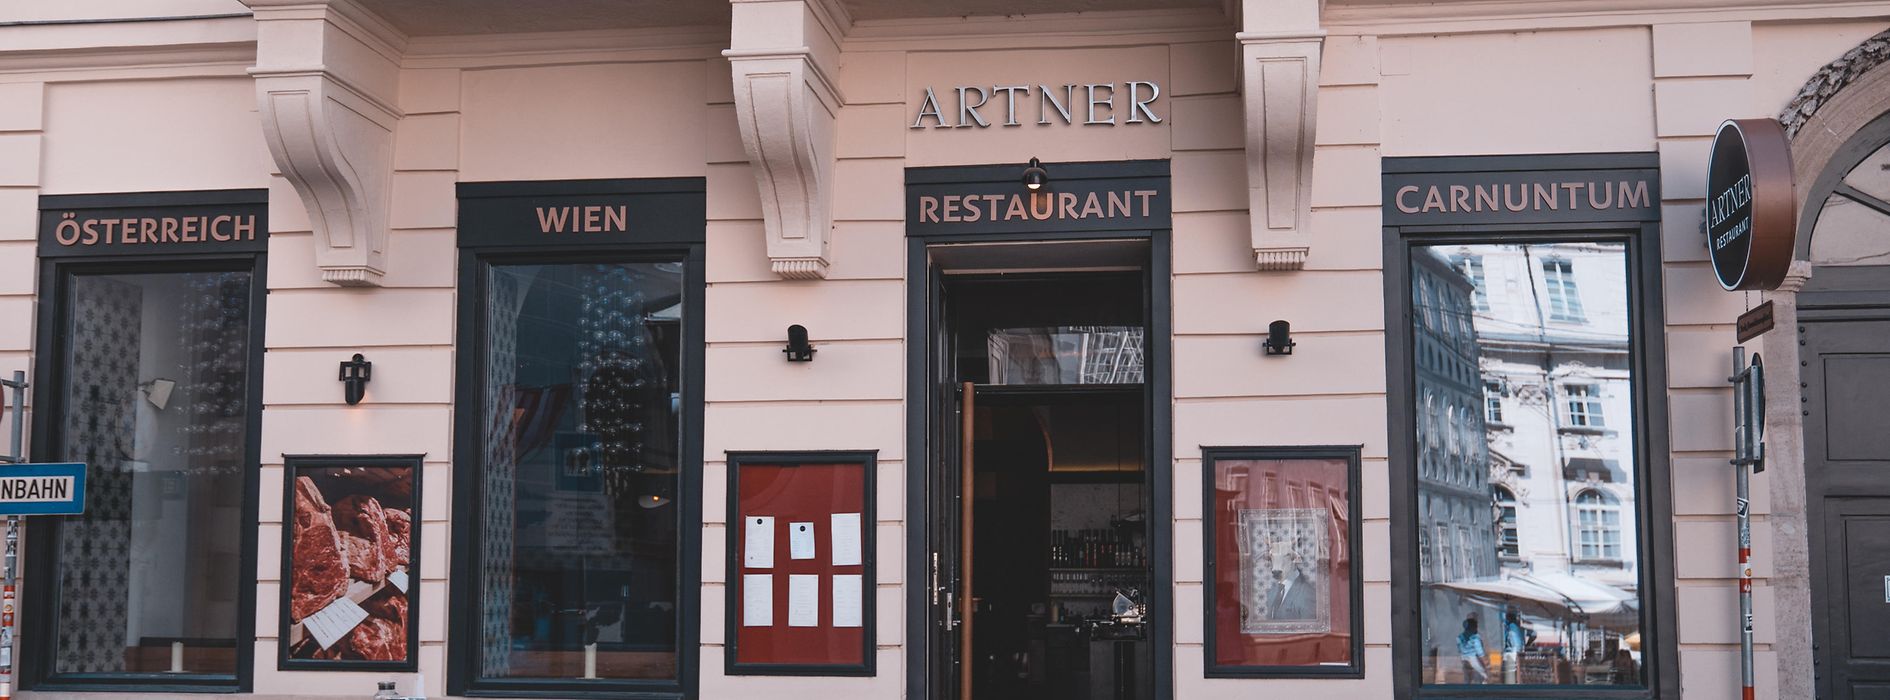 Restaurant Artner am Franziskanerplatz